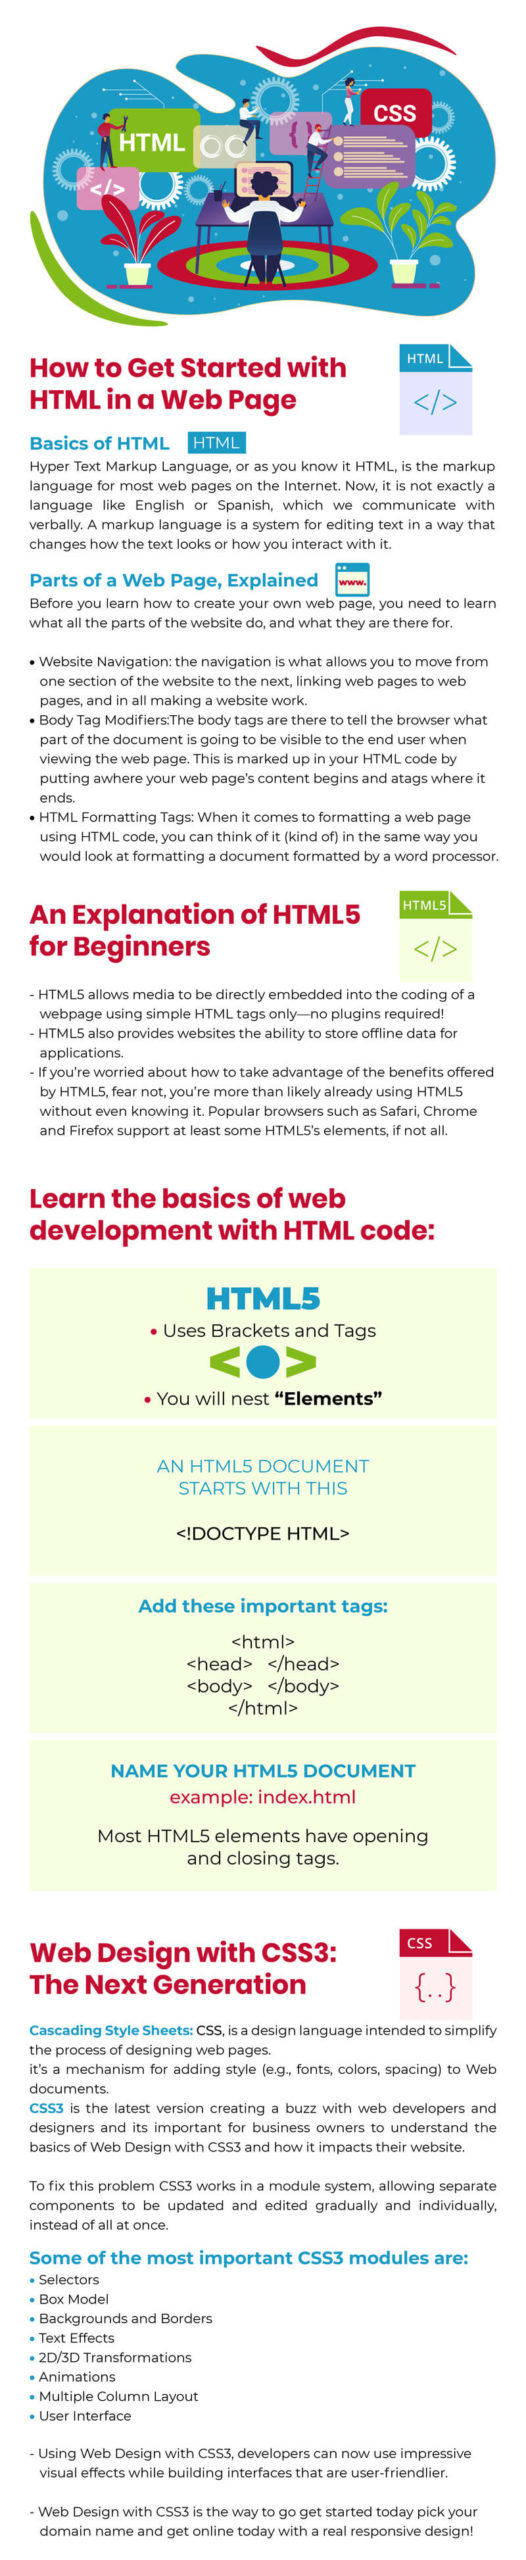 html infographic